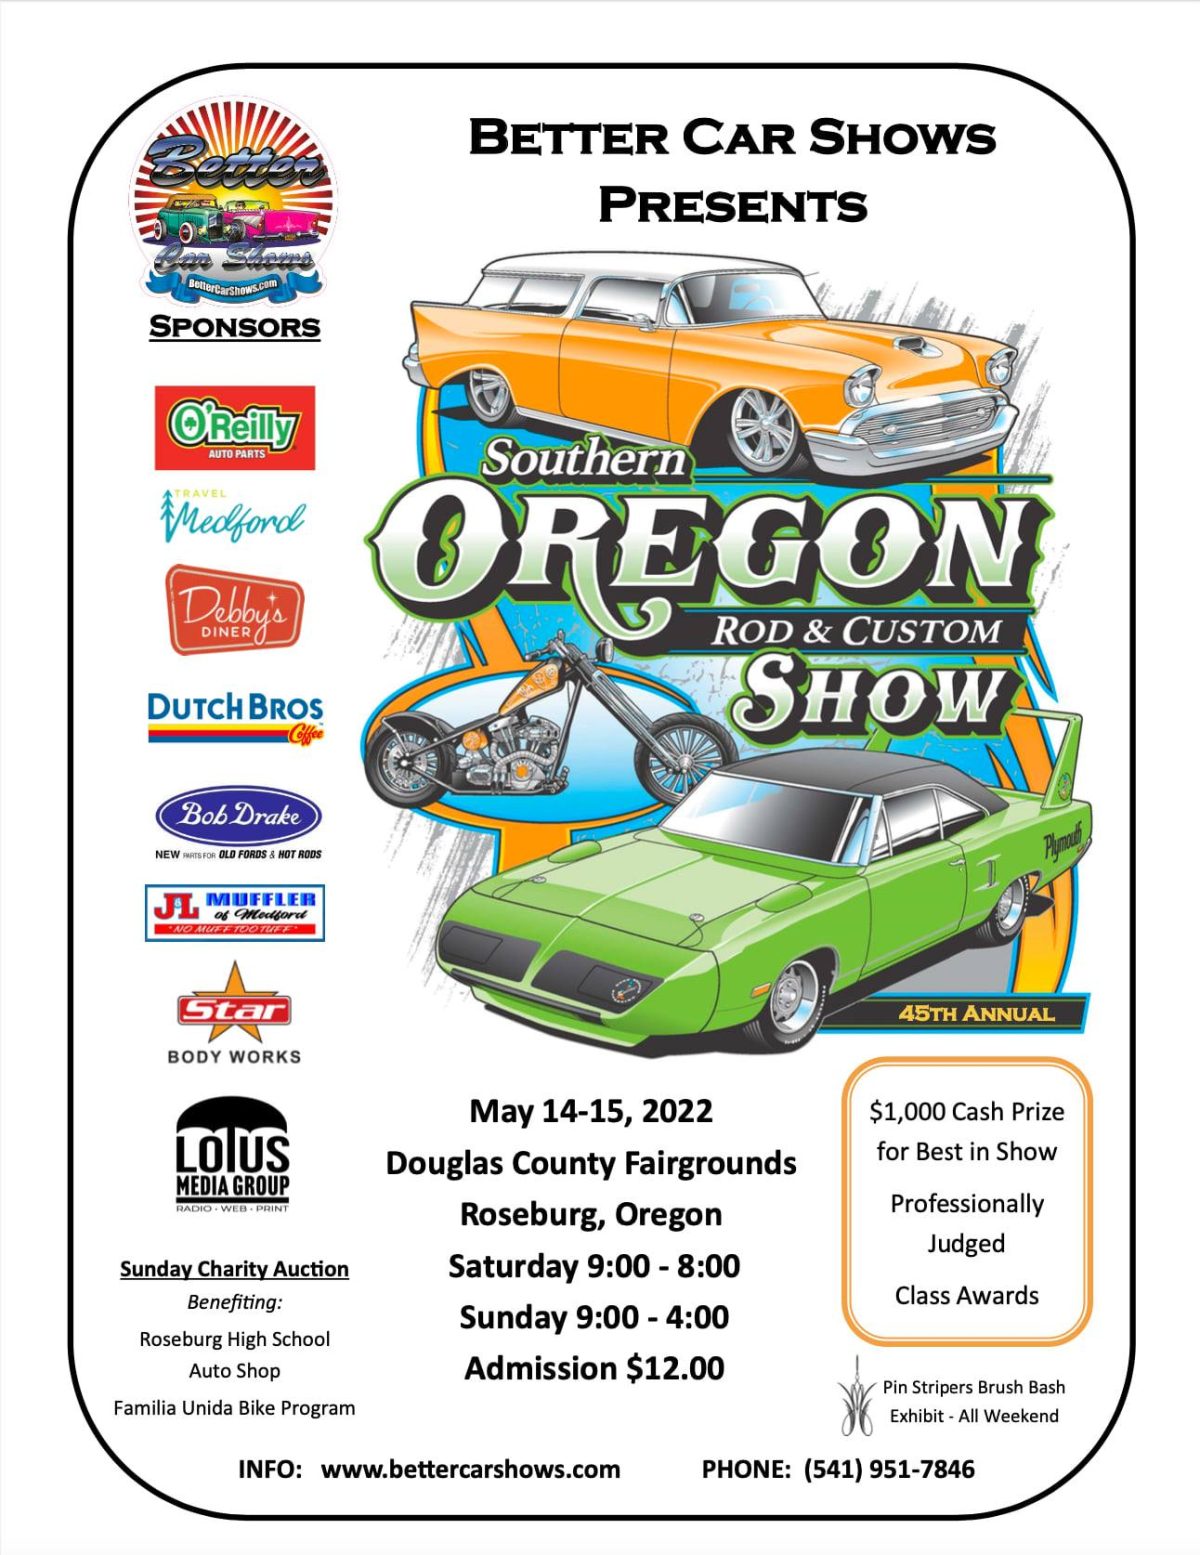 Southern Oregon Rod & Custom Show 2023